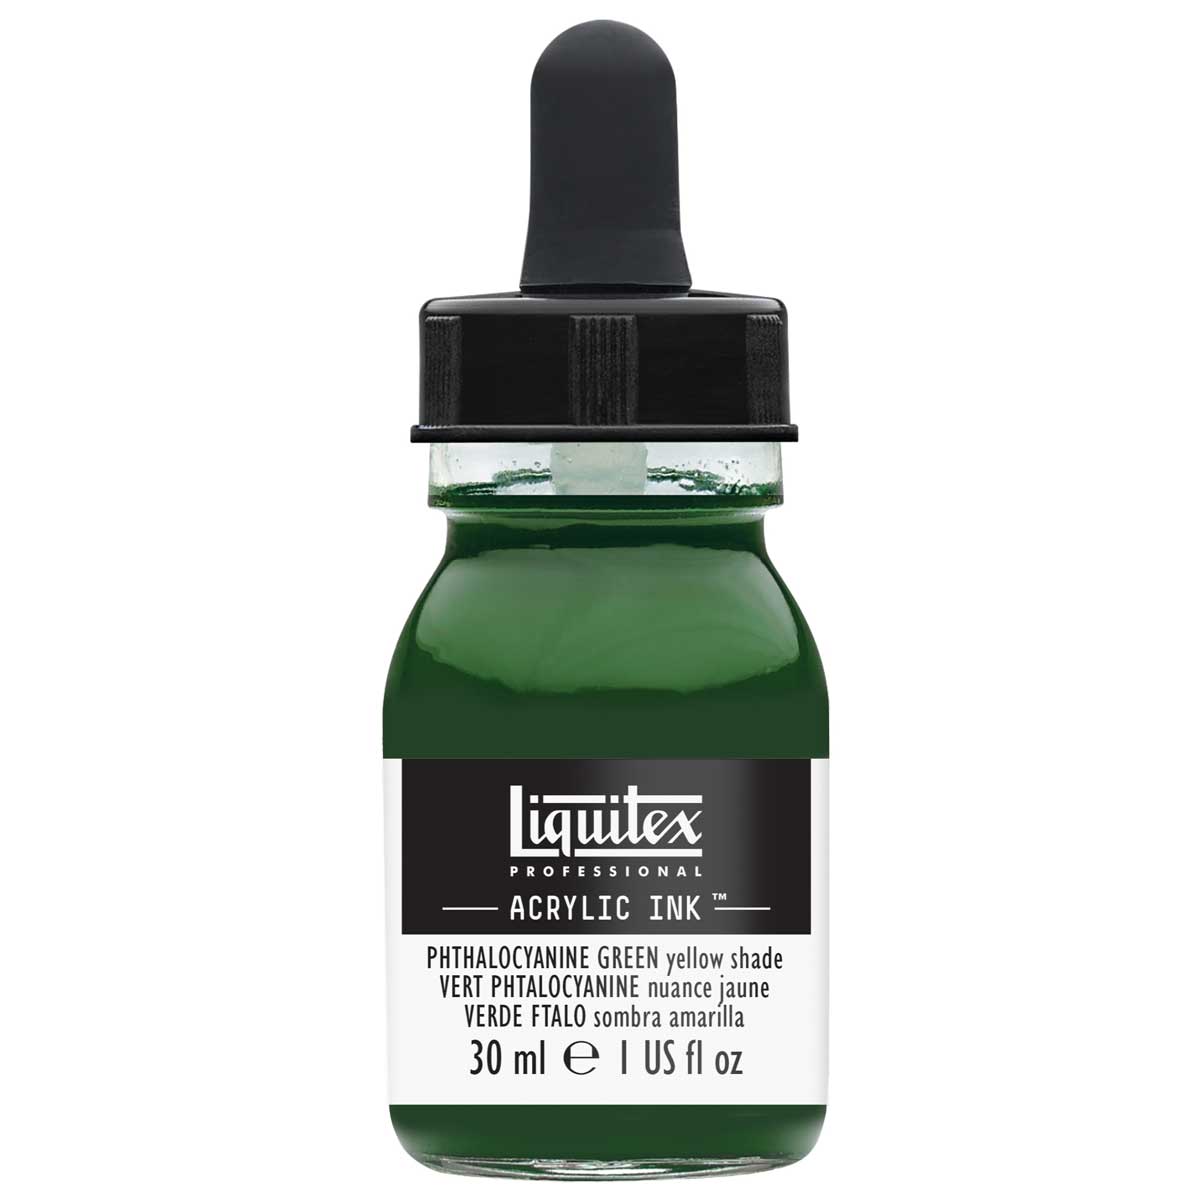 Liquitex Professional Acrylic Ink - Phthalo Green (YS) 30ml/1oz